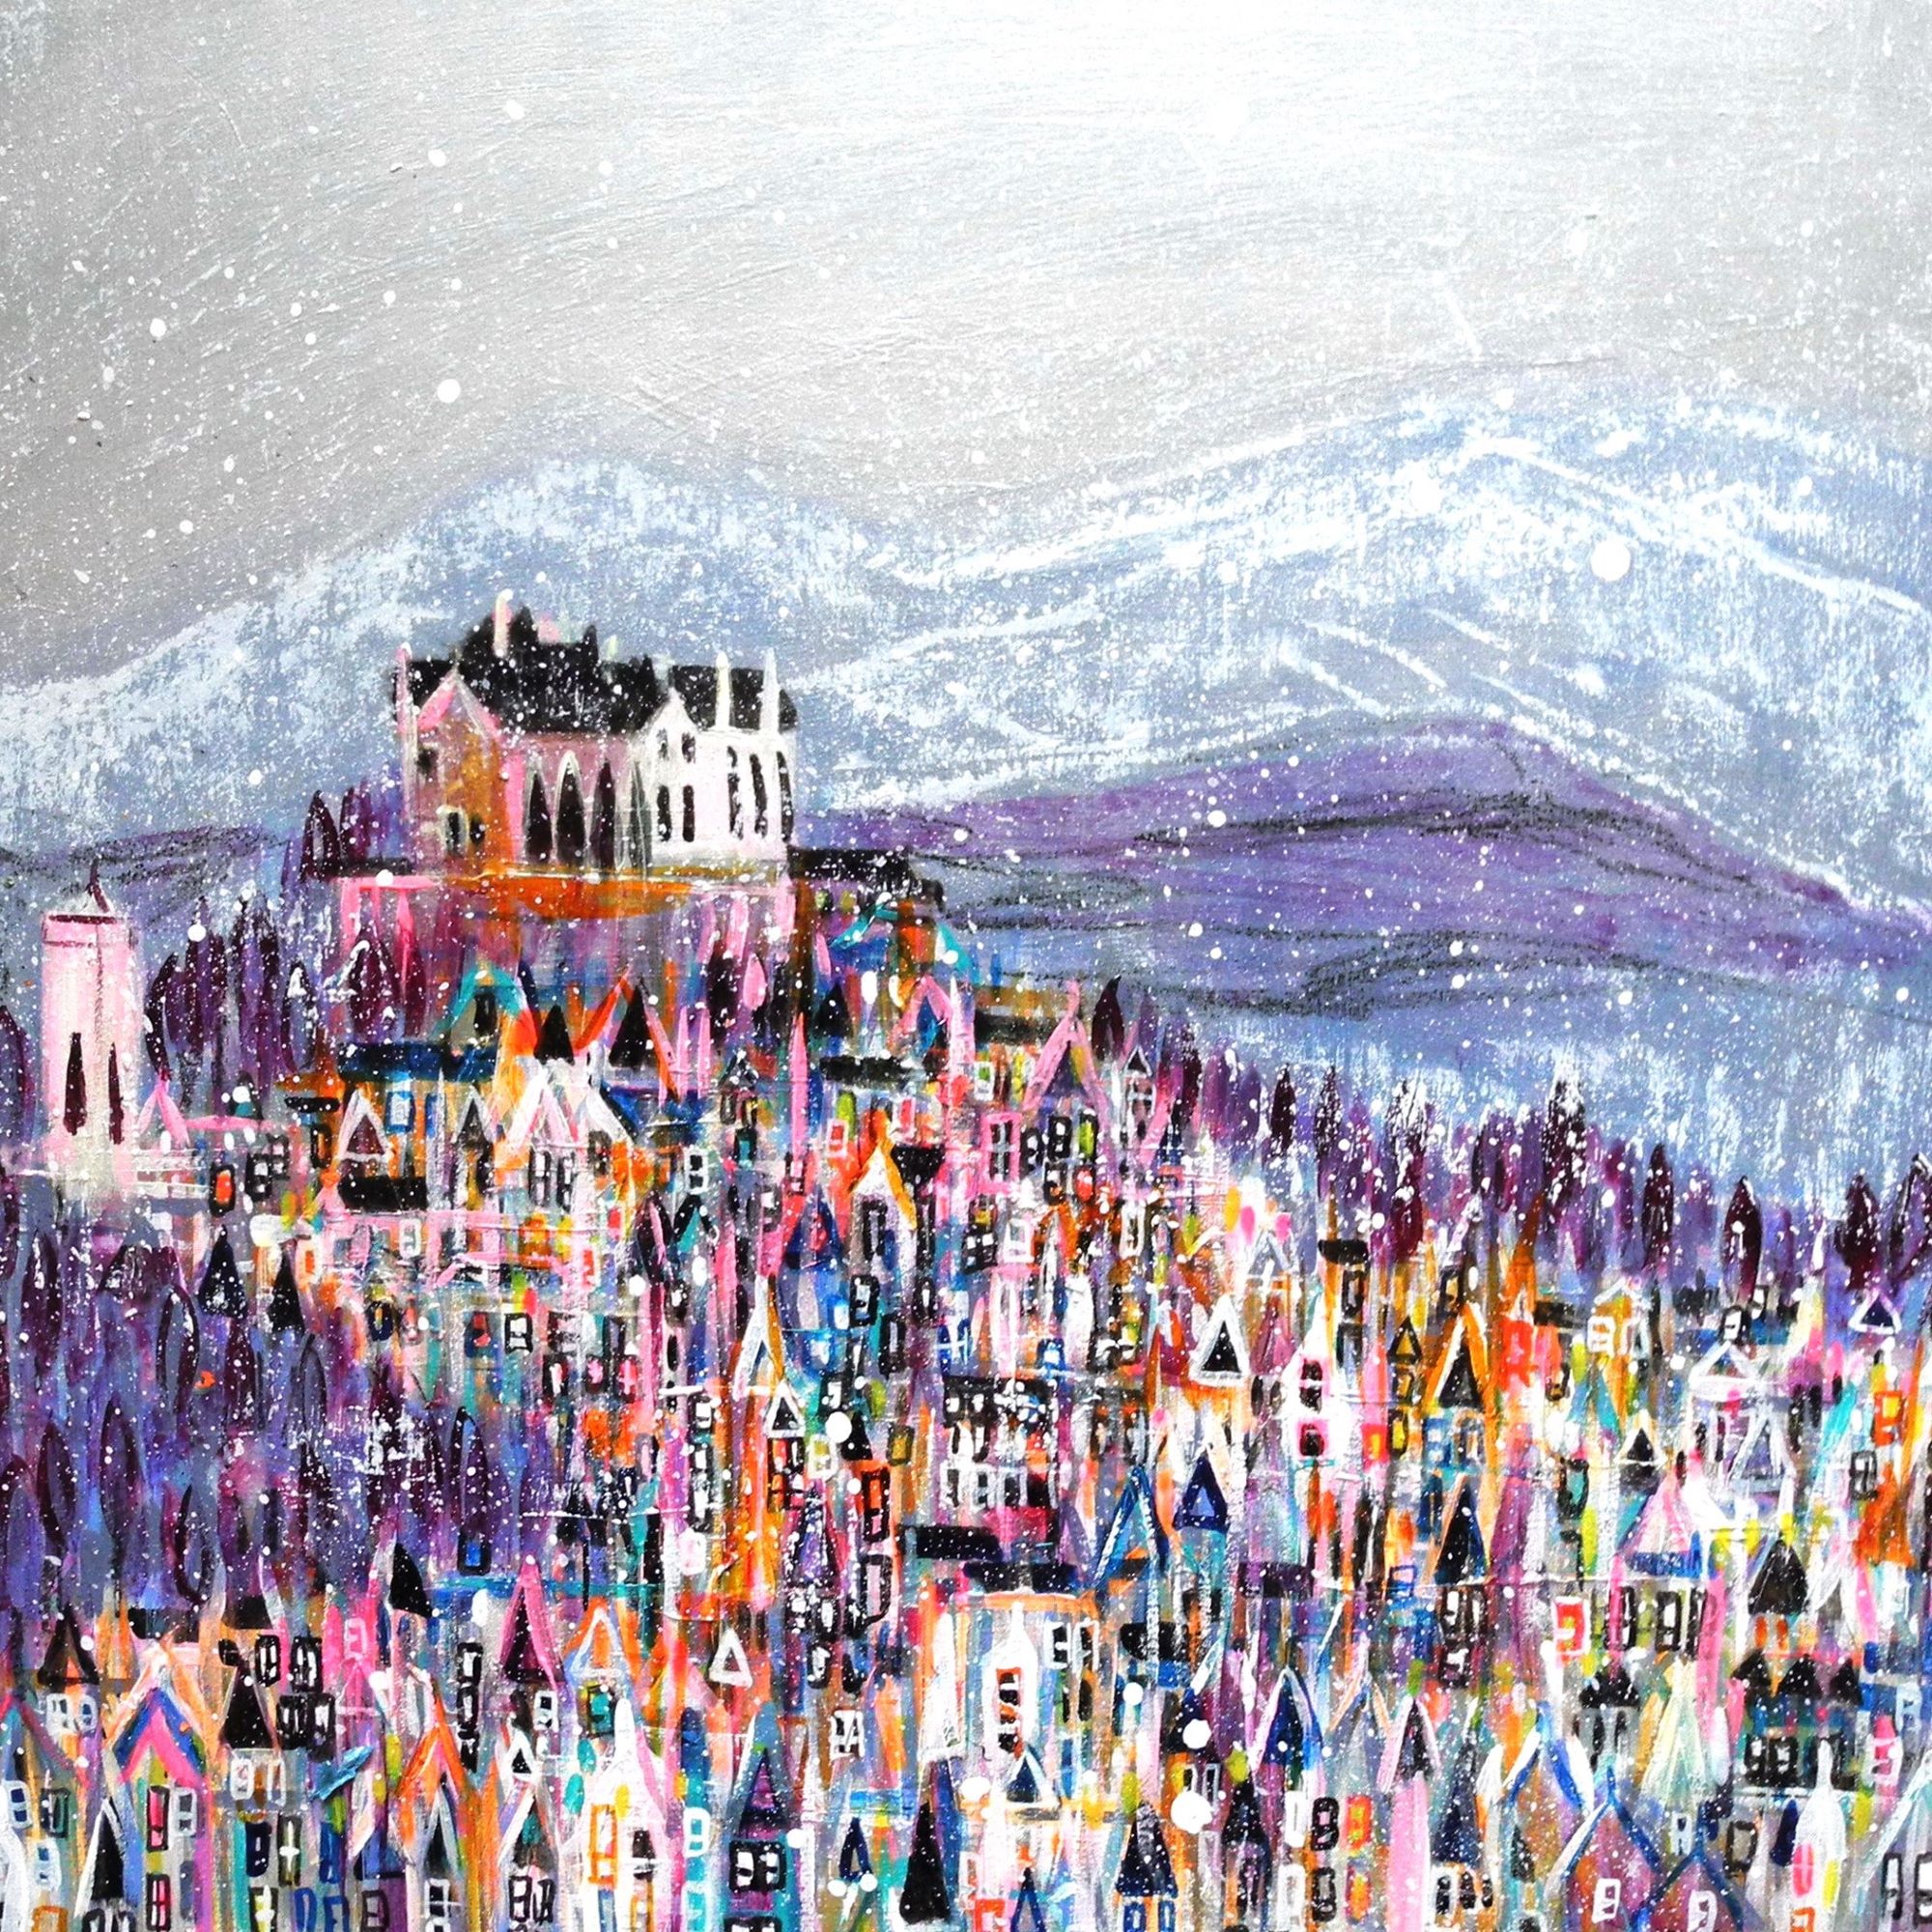 'Stirling Snowfall' by artist Nikki  Monaghan